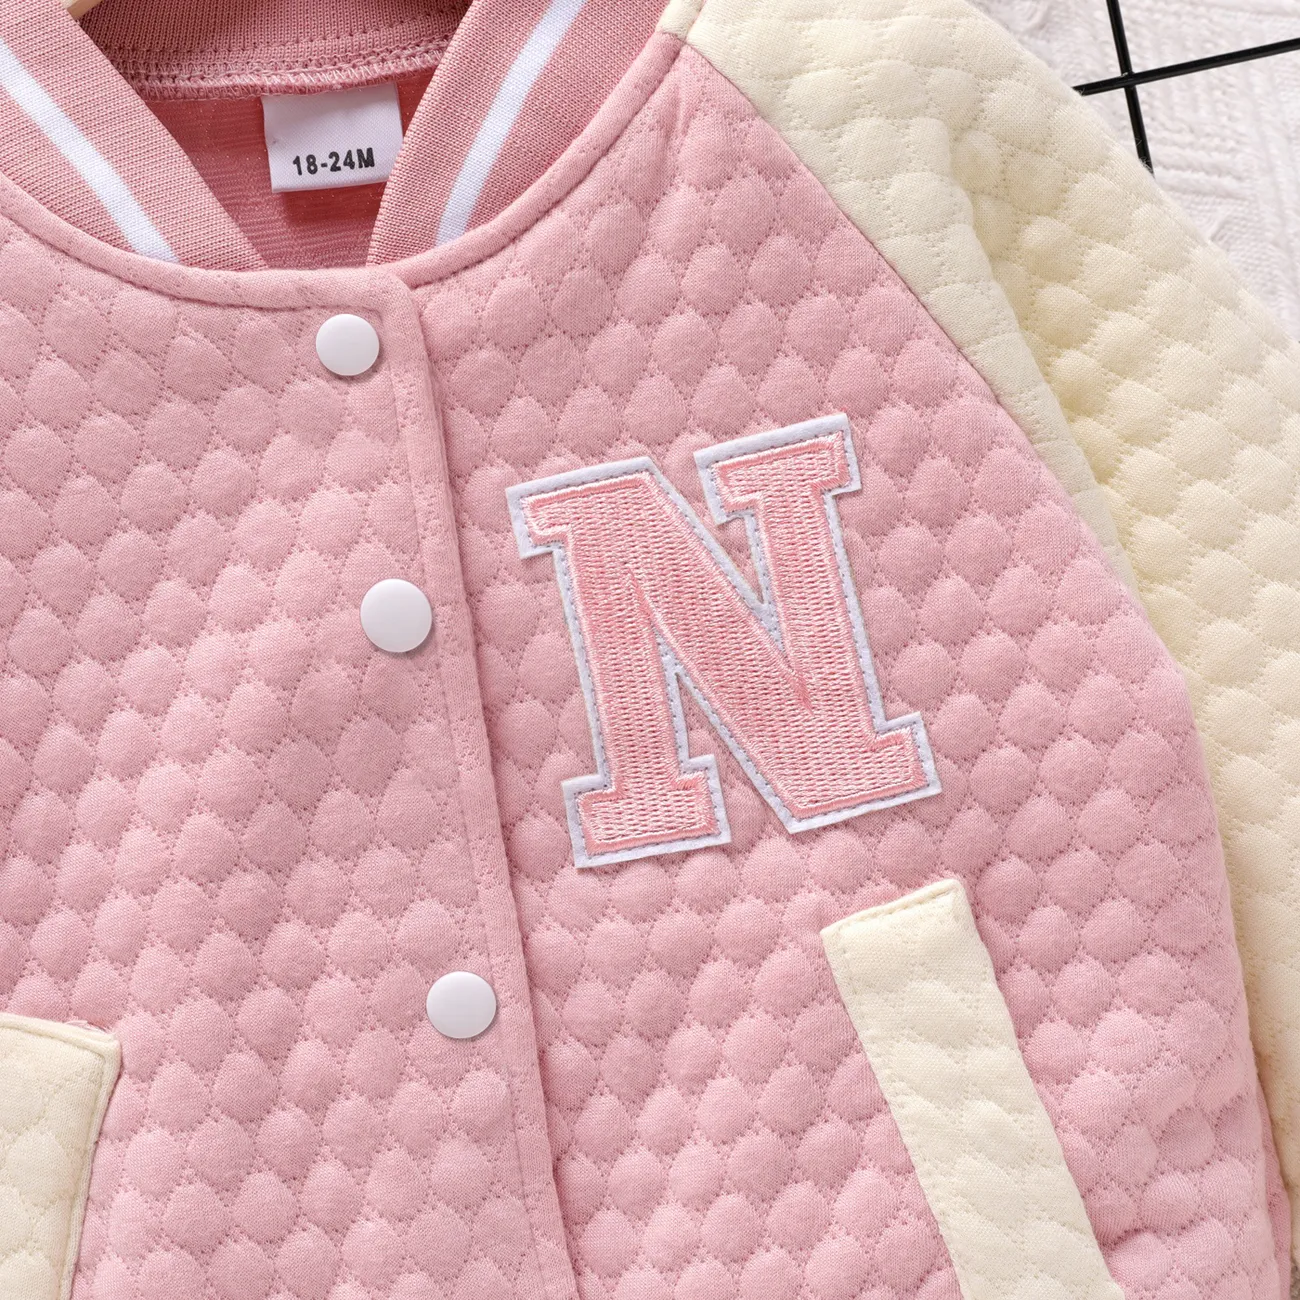 Toddler Girl 100% Cotton Letter Embroidered Textured Striped Button Design Bomber Jacket Pink big image 1